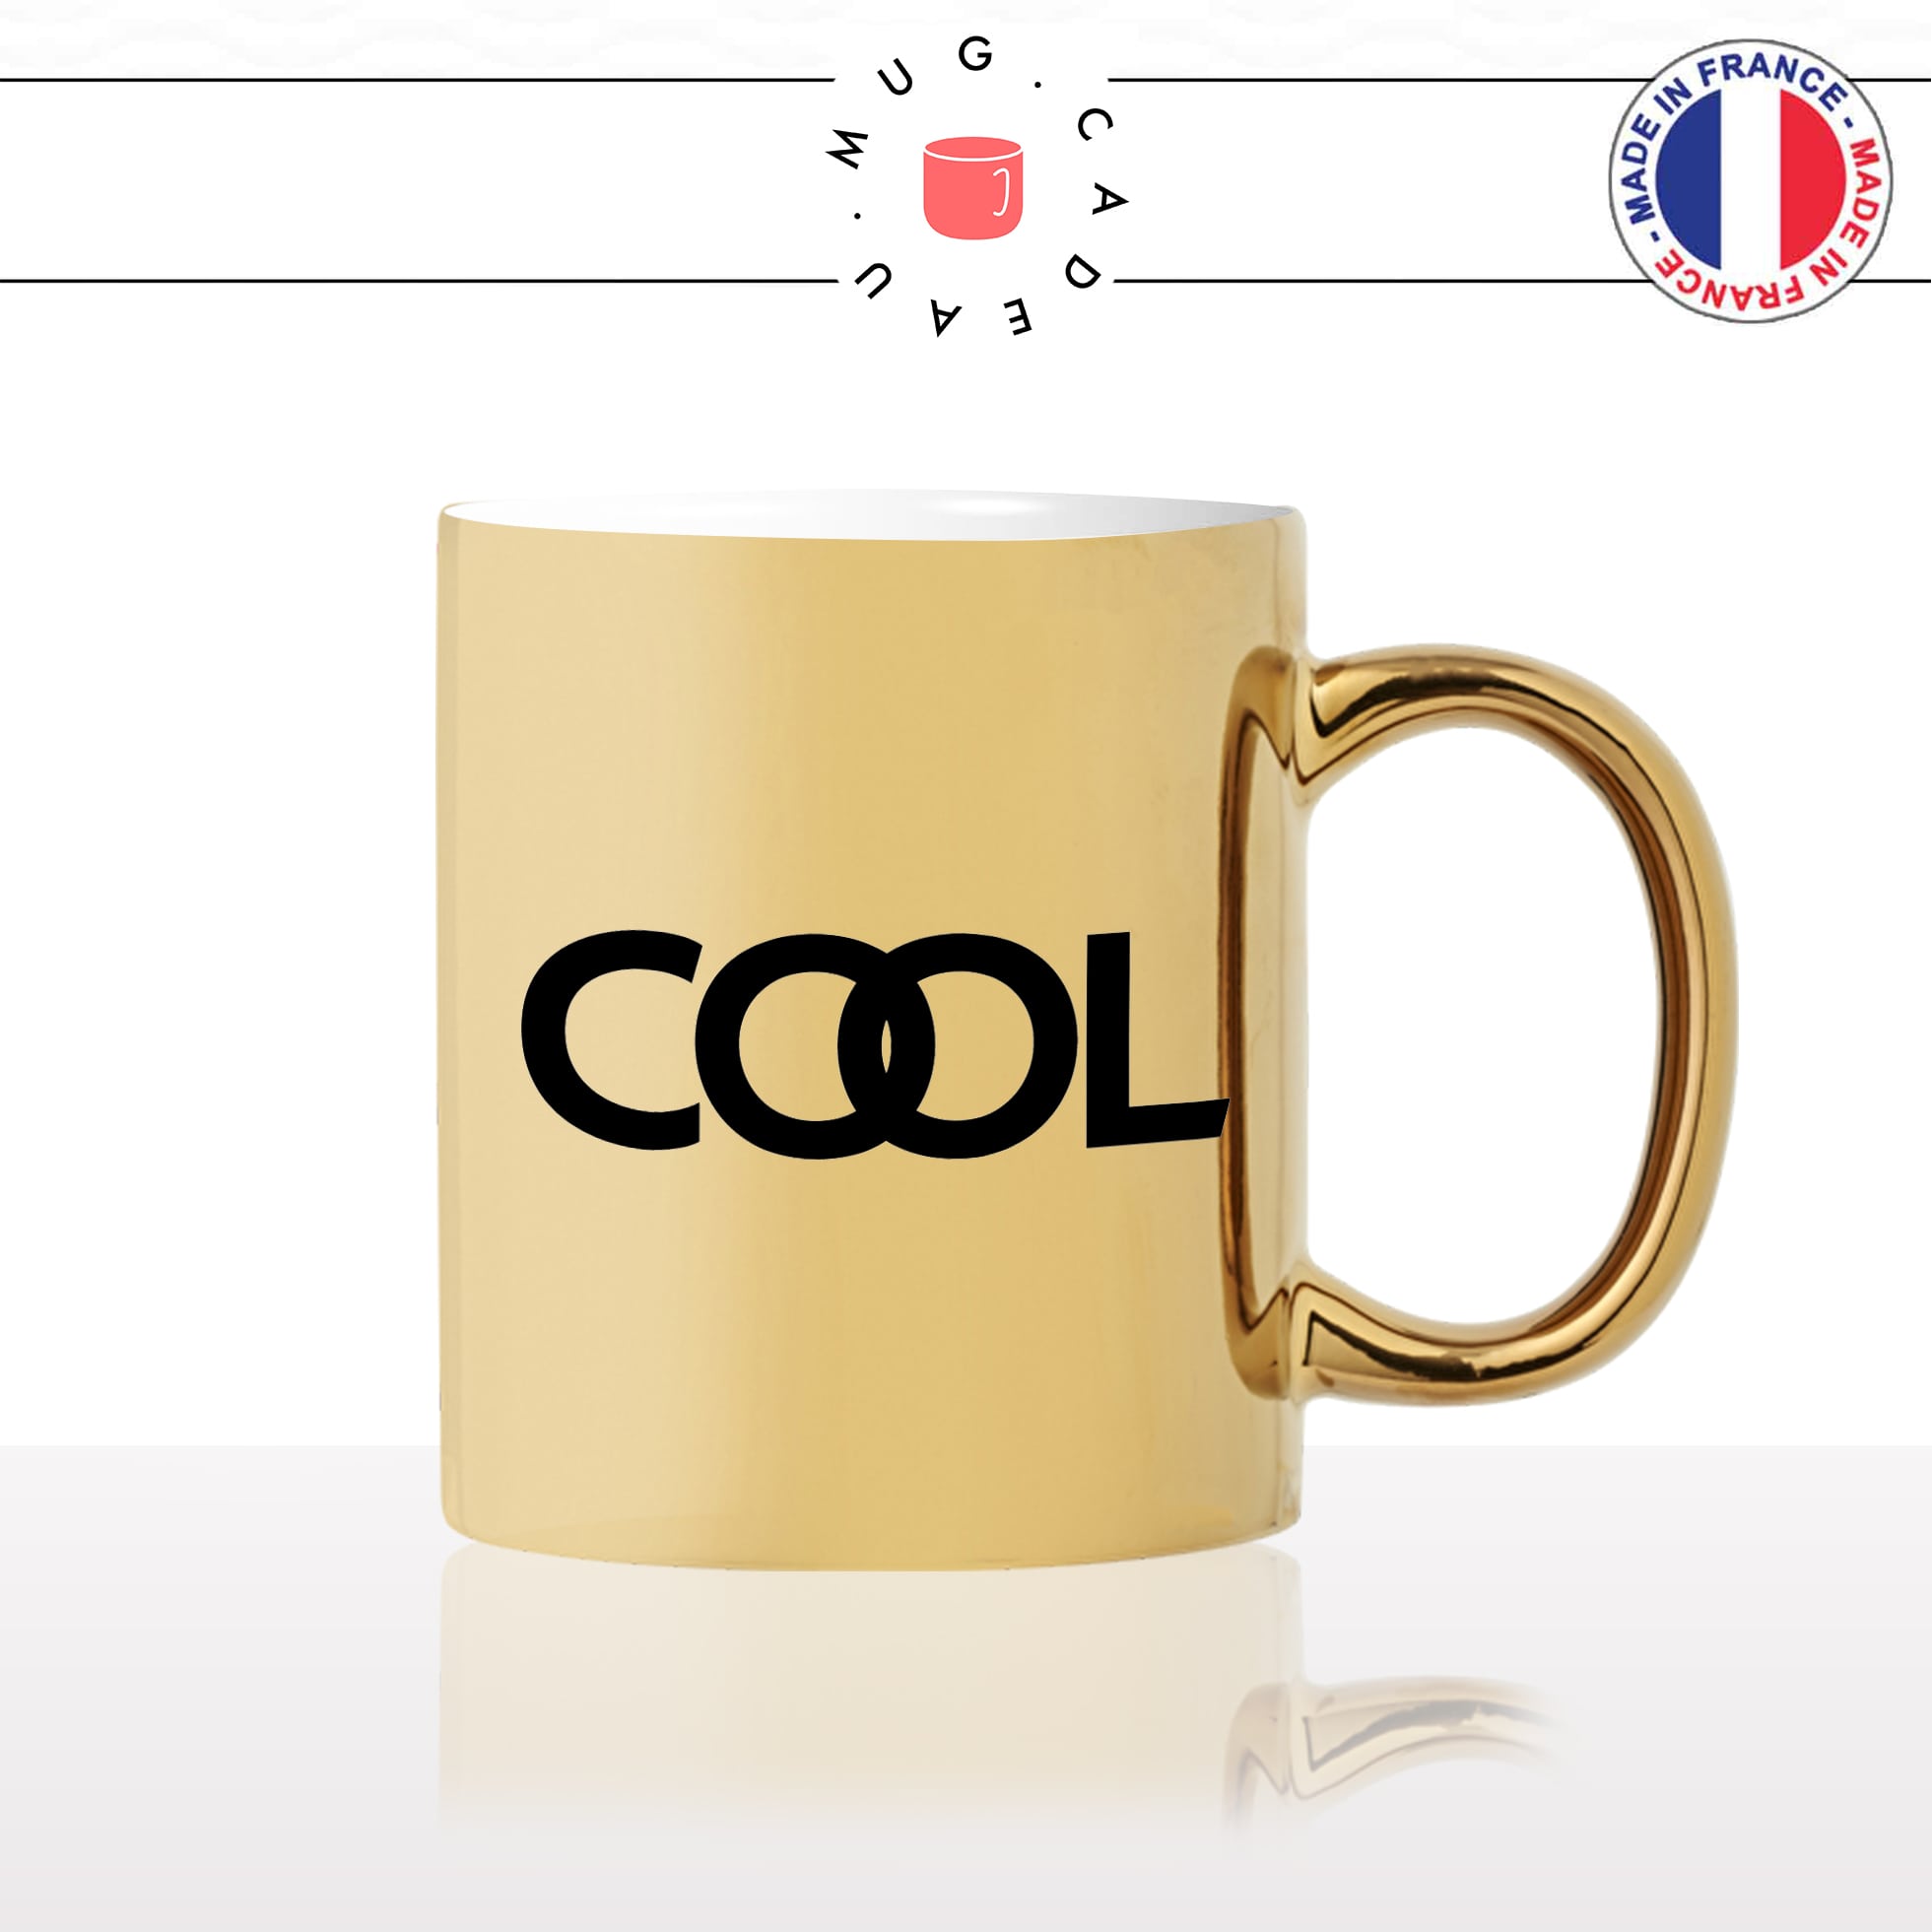 mug-tasse-or-doré-gold-cool-mot-anglais-expression-jeune-homme-mec-ado-humour-fun-idée-cadeau-originale-coole-unique2-min